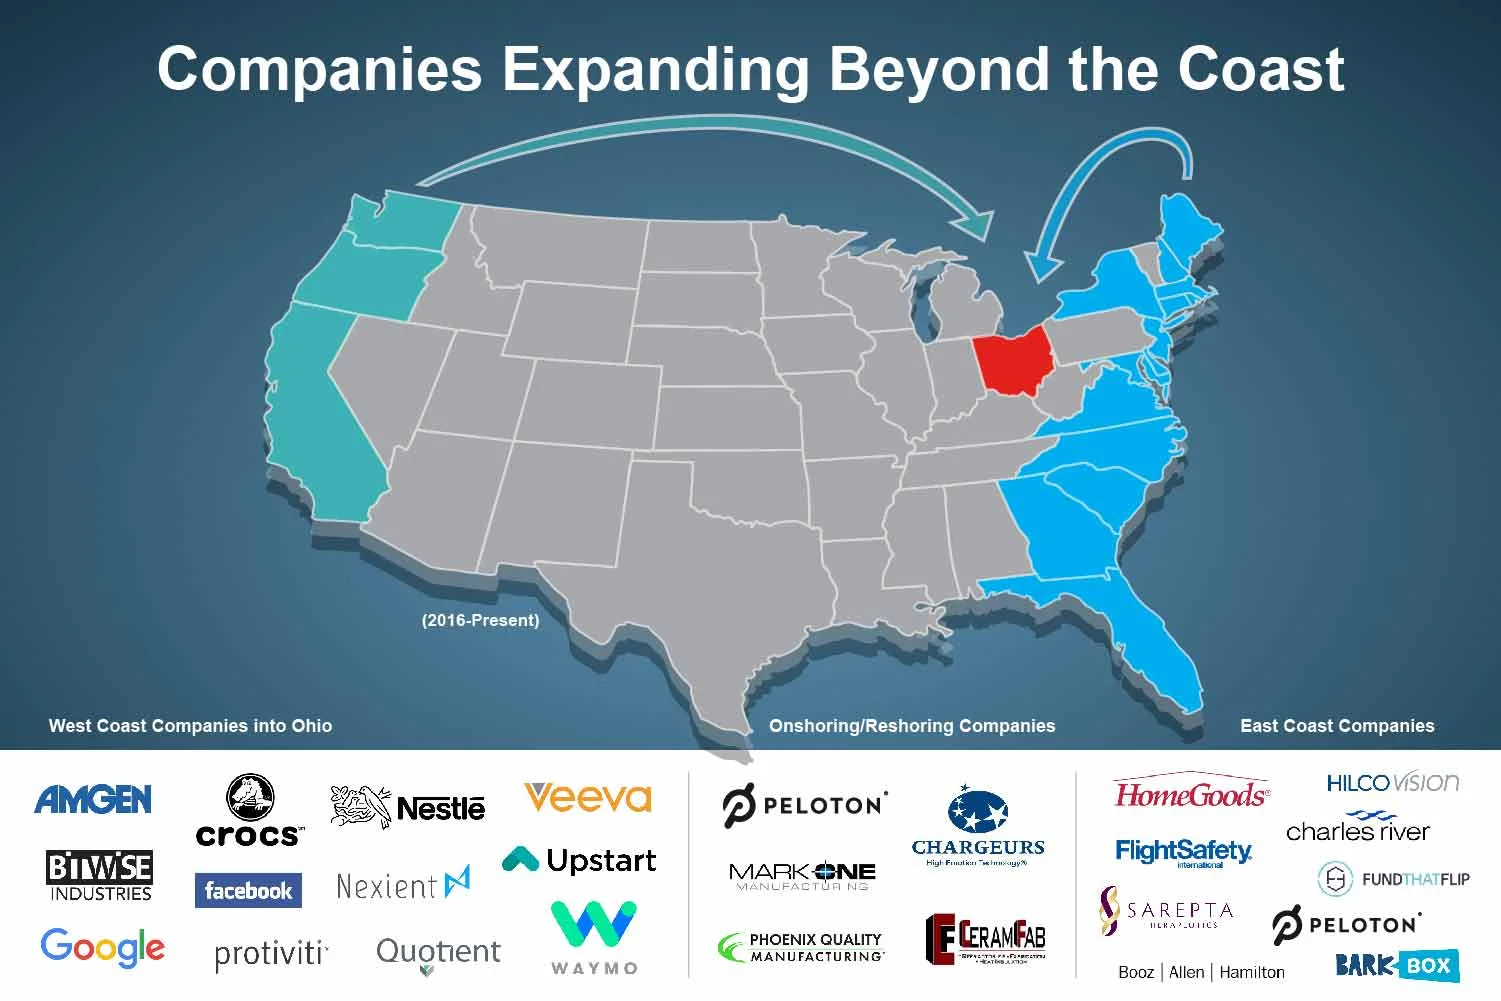 Companies expanding across the U.S. Map